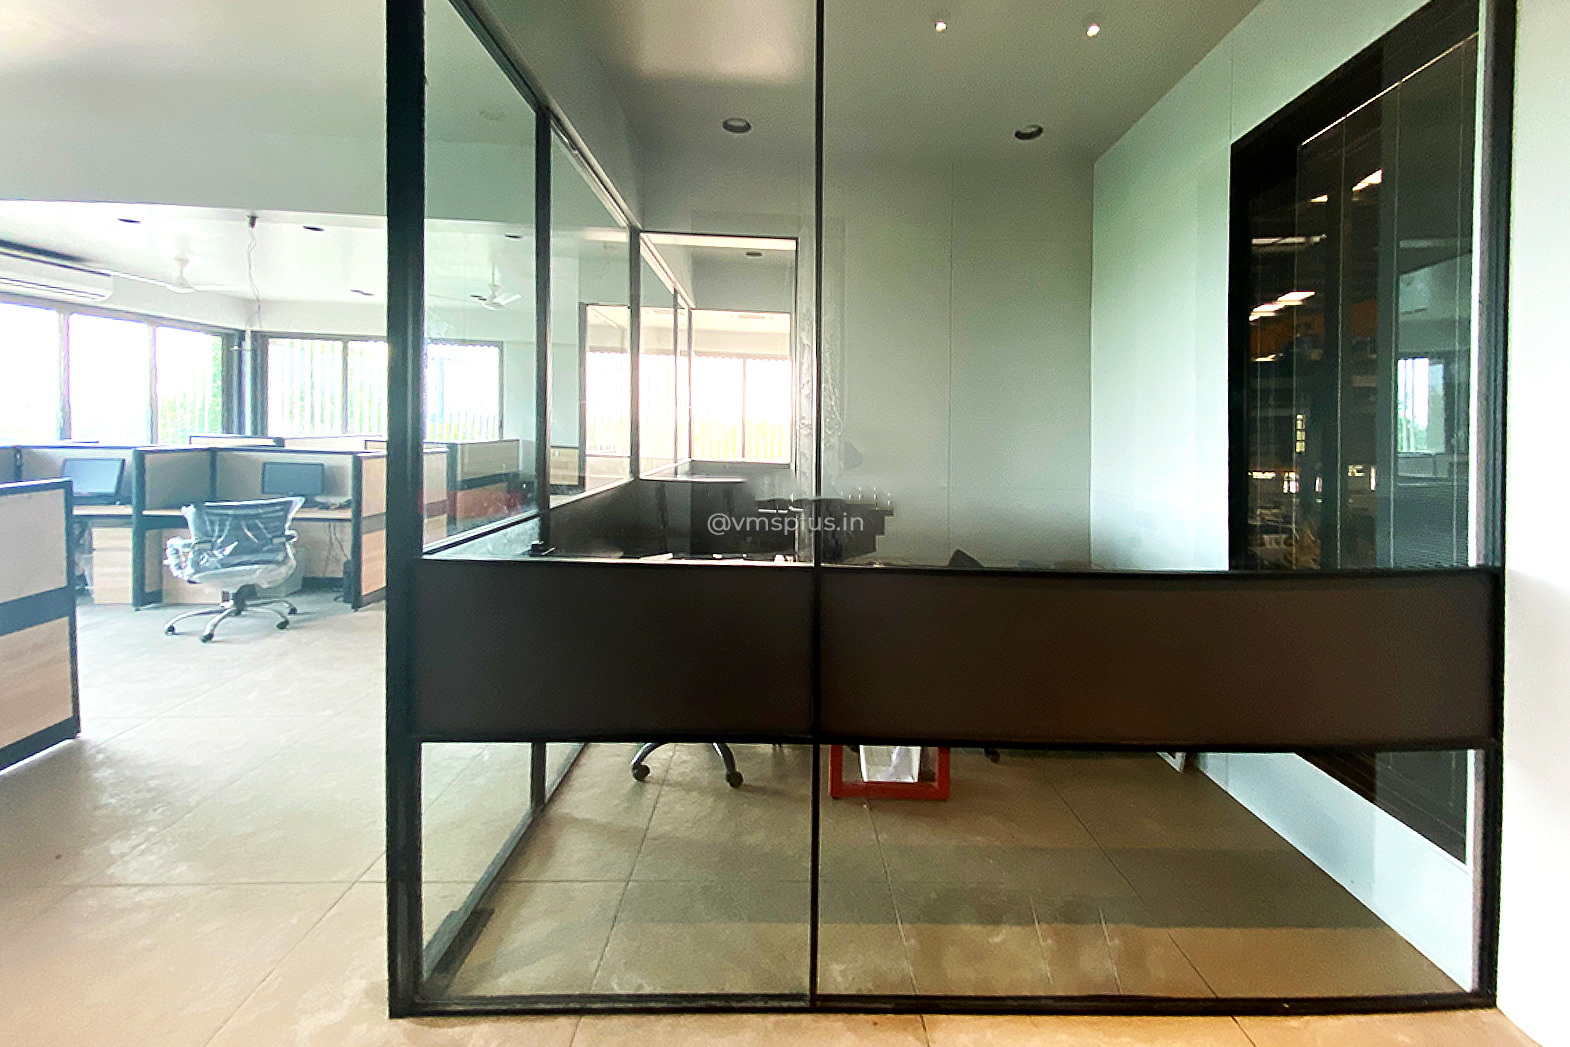 A Frameless Glass Wall System For An Office Design